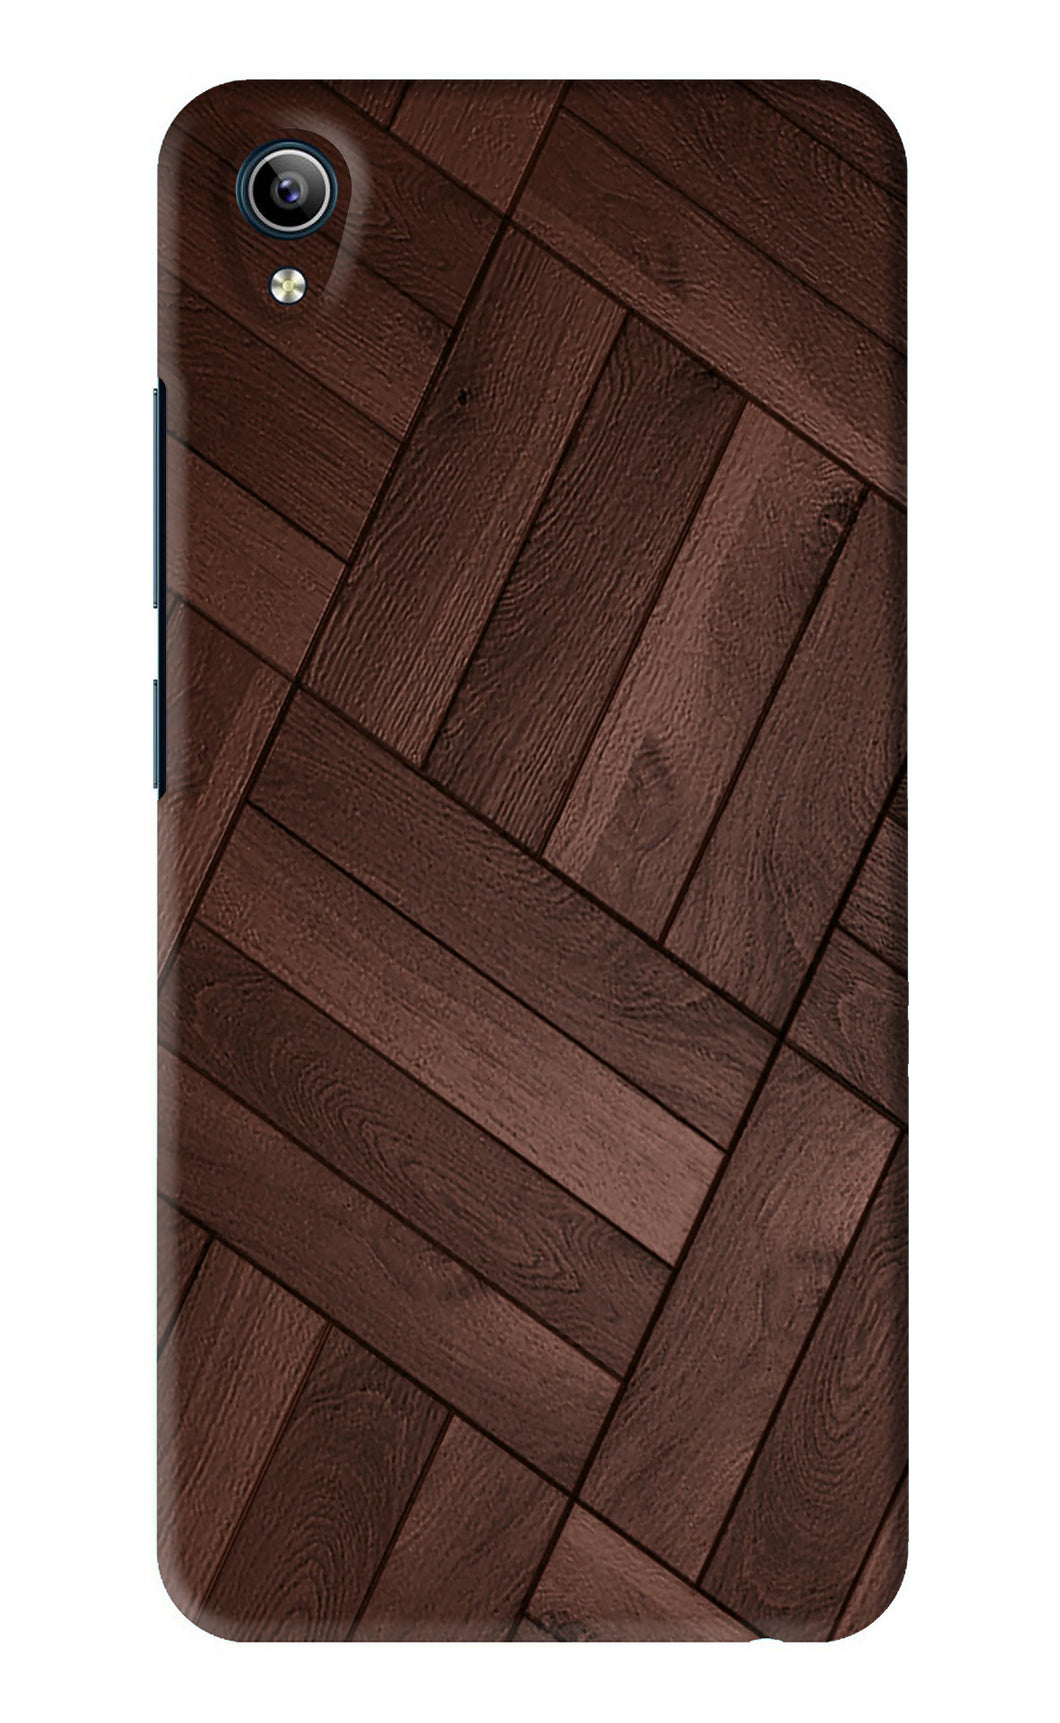 Wooden Texture Design Vivo Y91i Back Skin Wrap